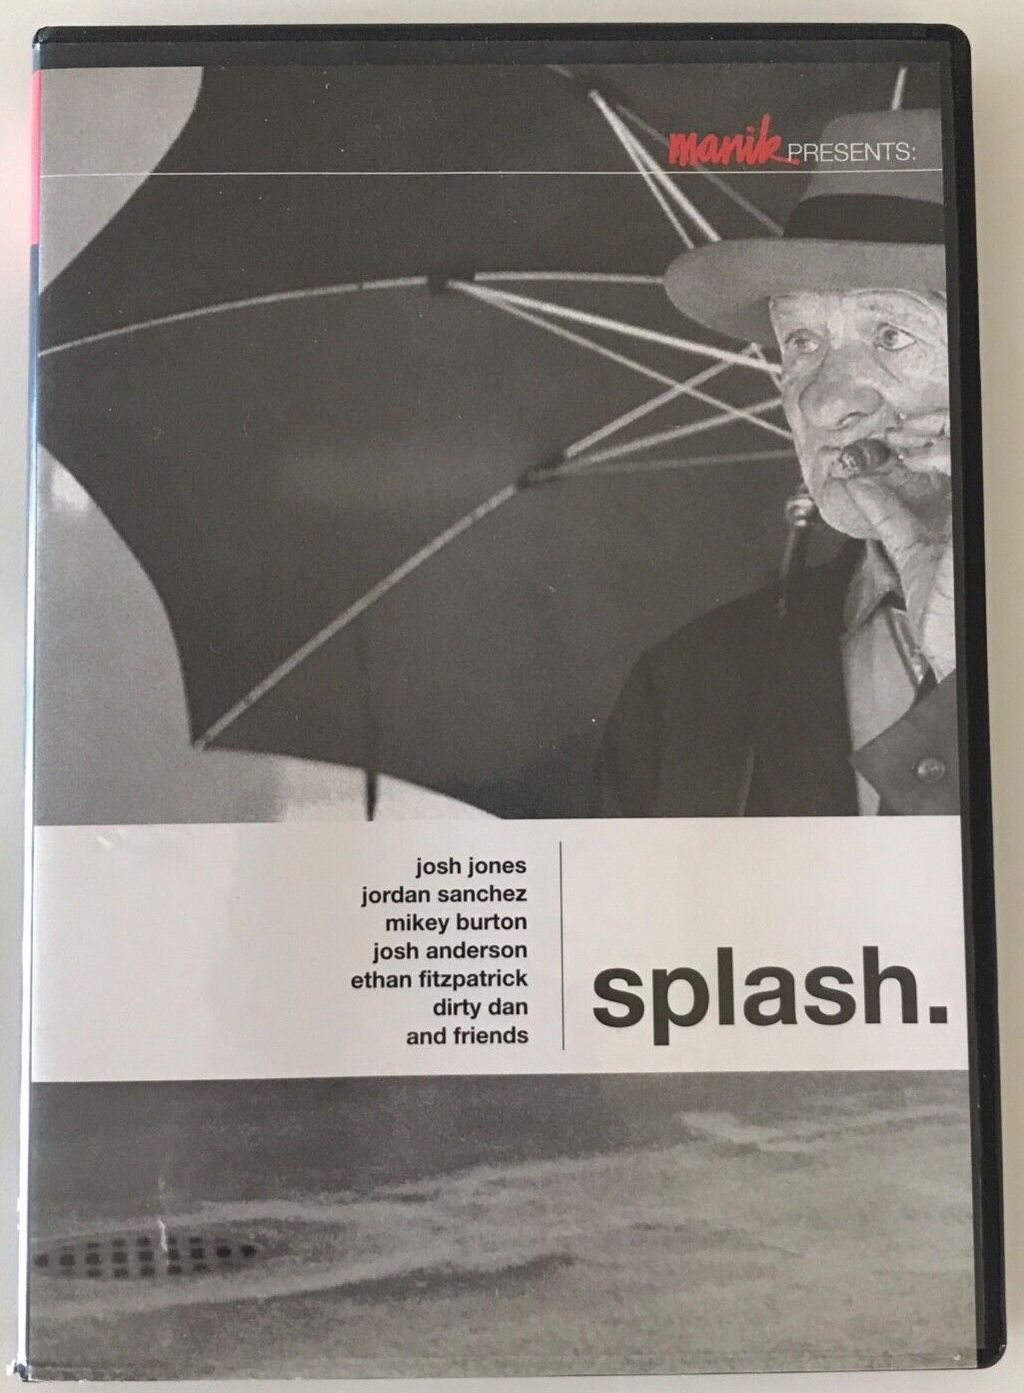 Manik - Splash cover